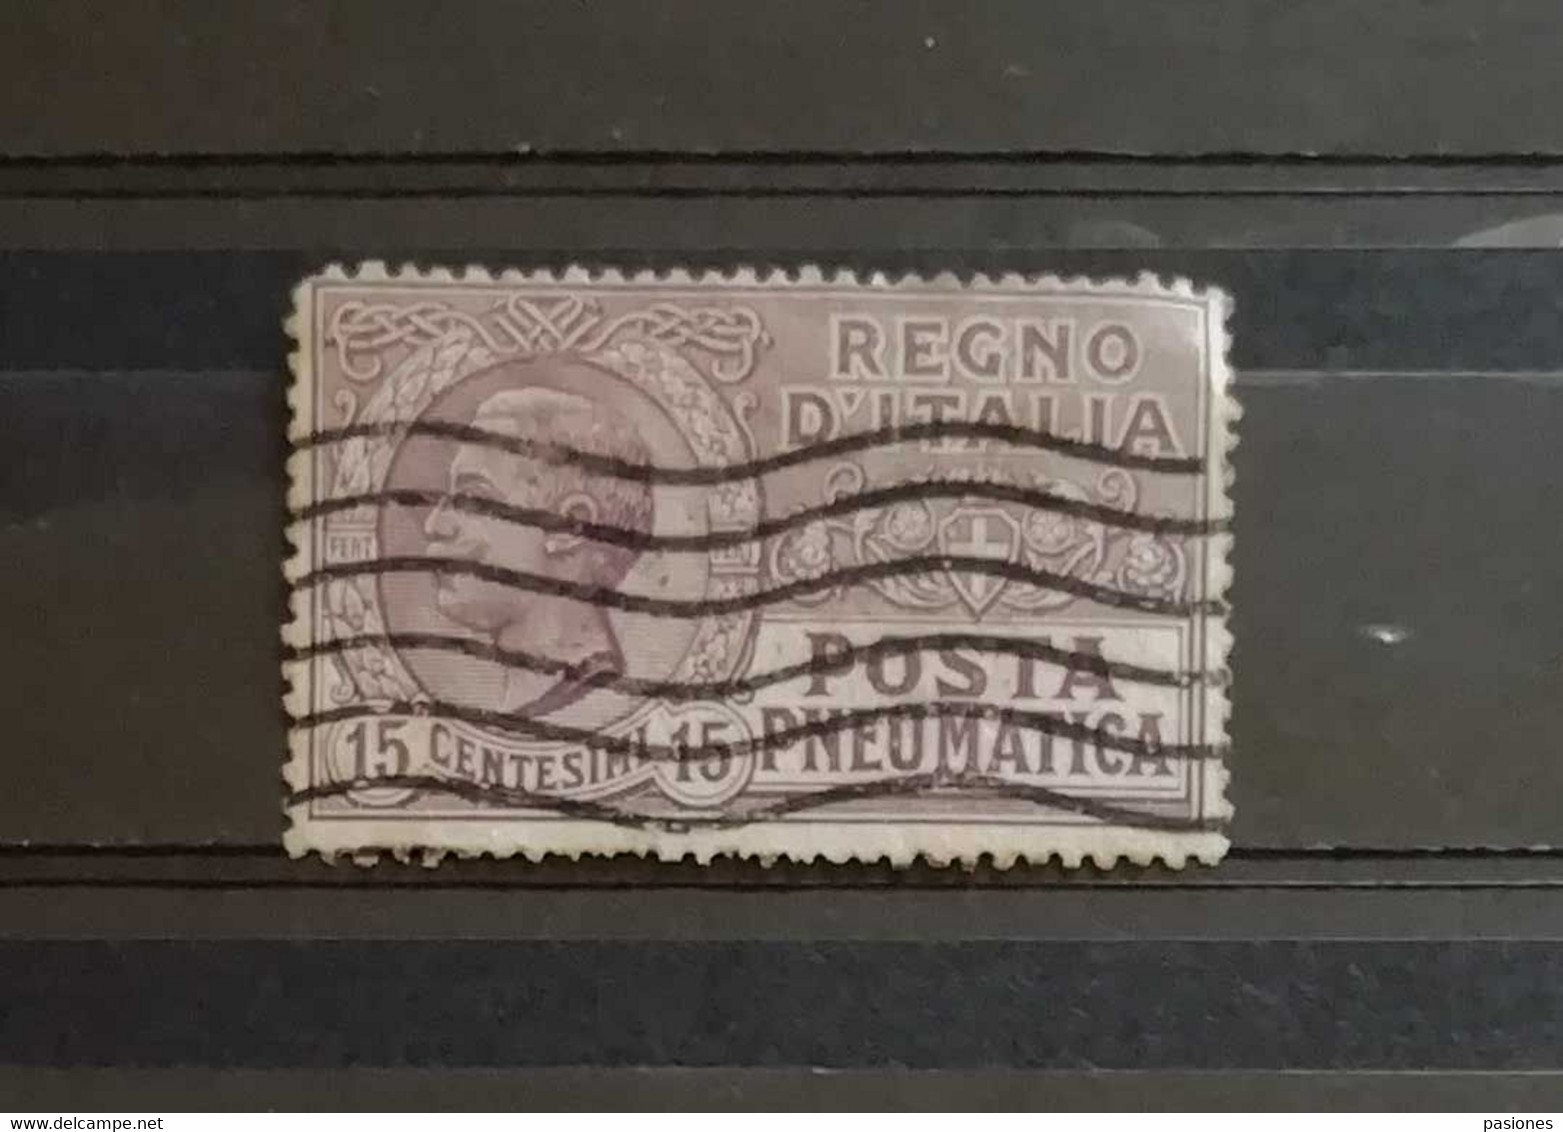 Regno D'Italia Vittorio Emanuele III 1913-23 N. 2 Posta Pneumatica Cent. 15 Usato - Rohrpost